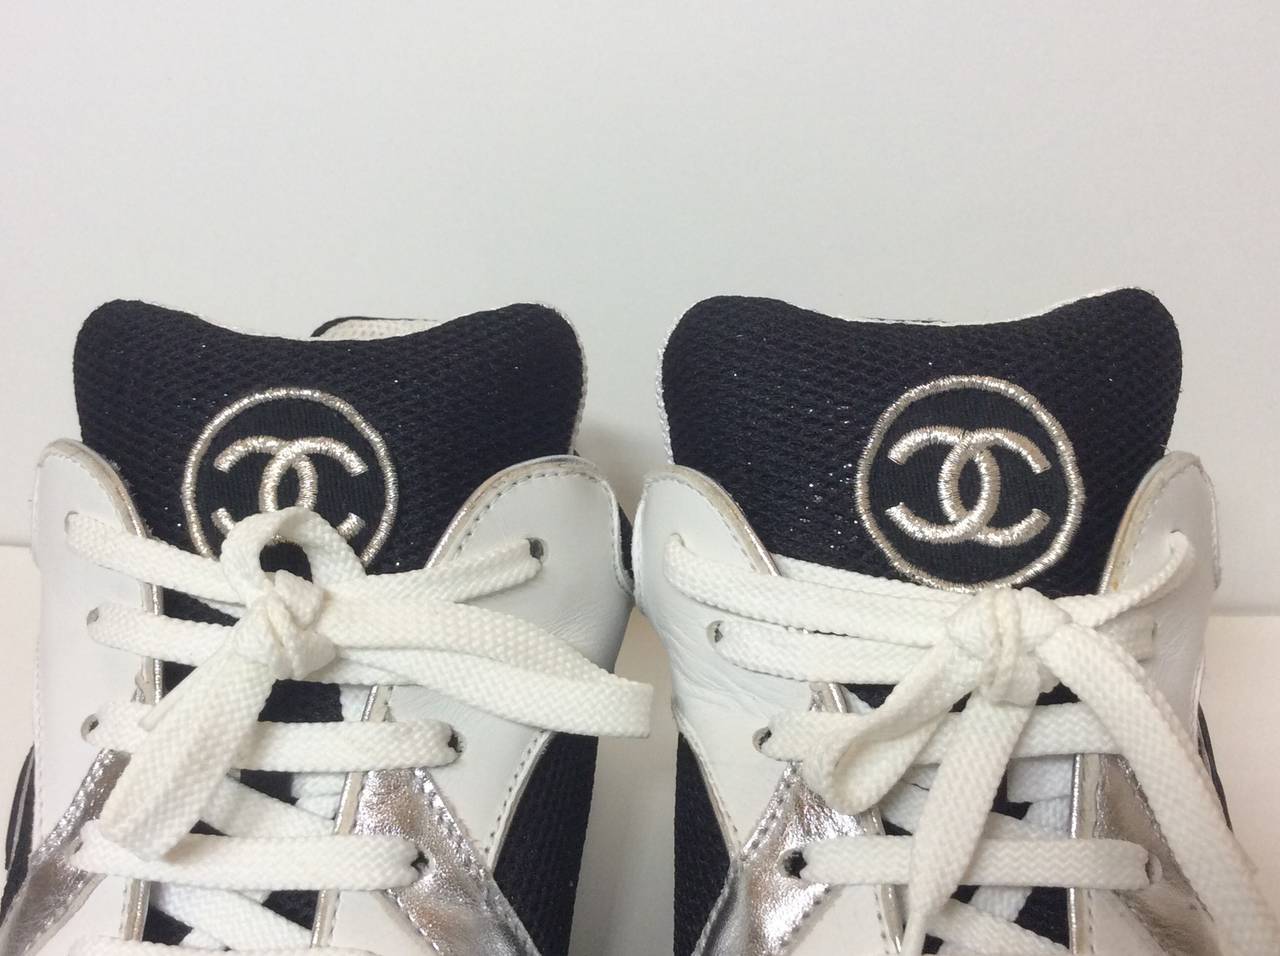 Women's Chanel 2015 Sneakers Sold Out Worldwide 39 1/3